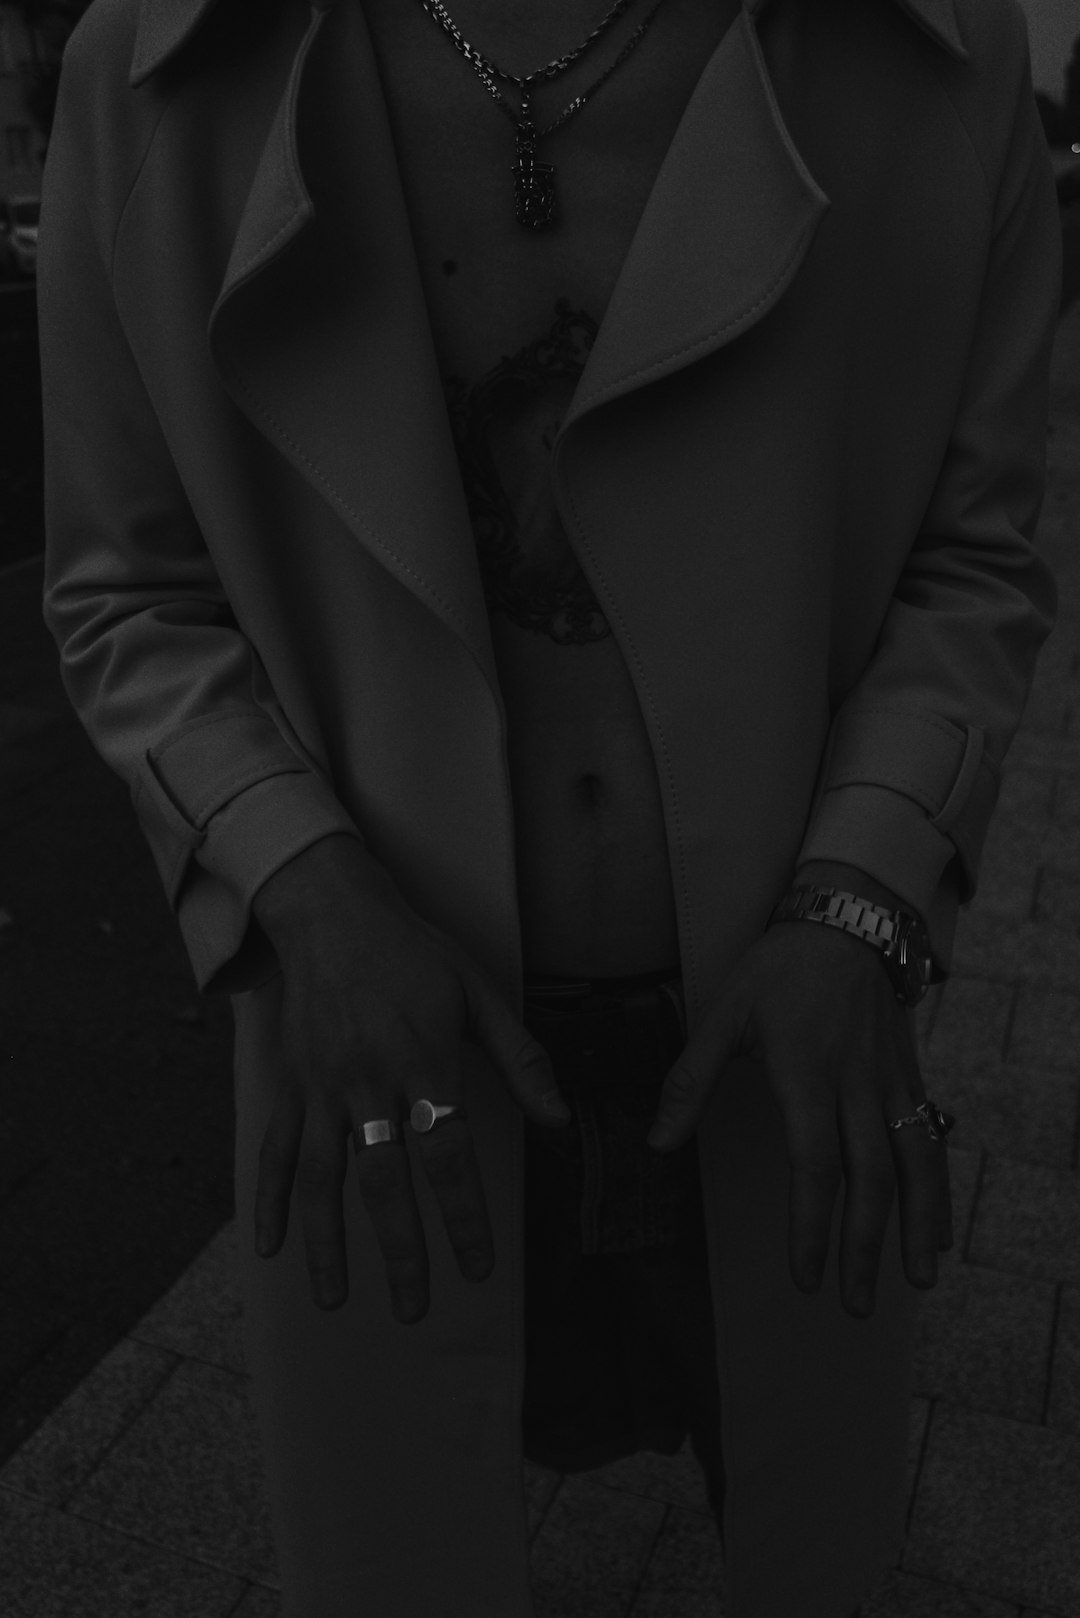 person in gray coat wearing black watch